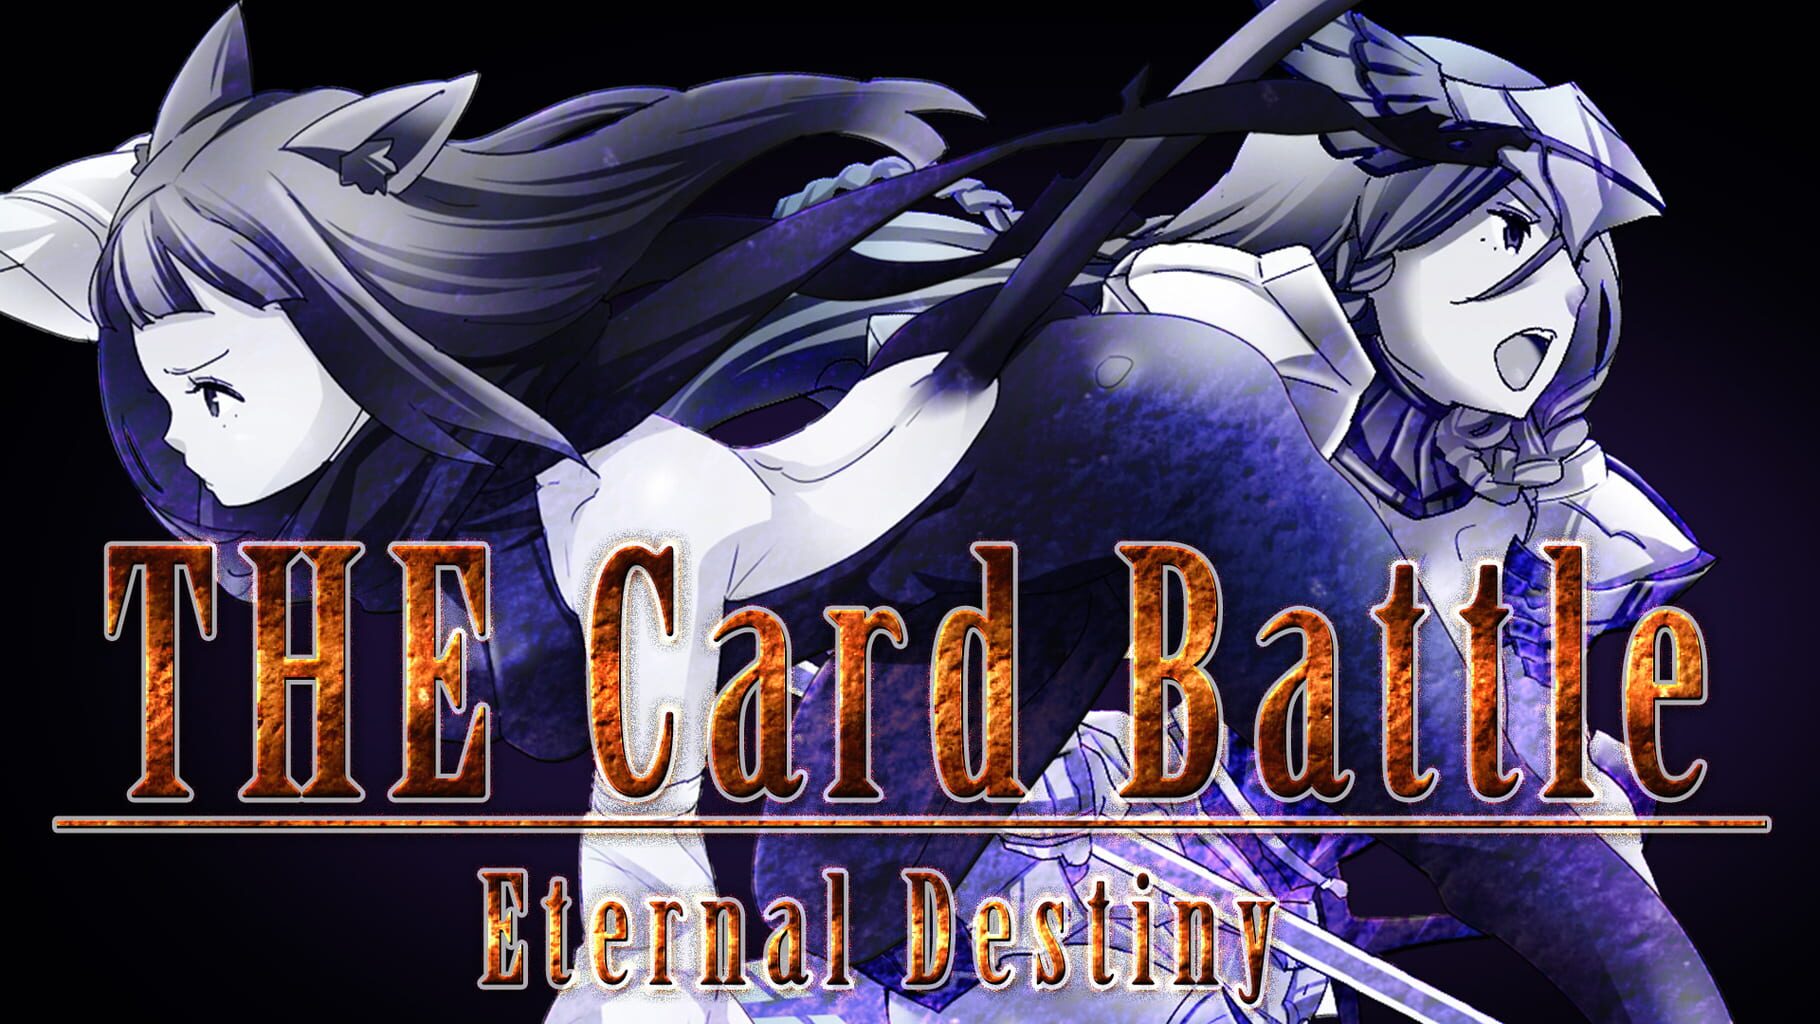 The Card Battle: Eternal Destiny artwork